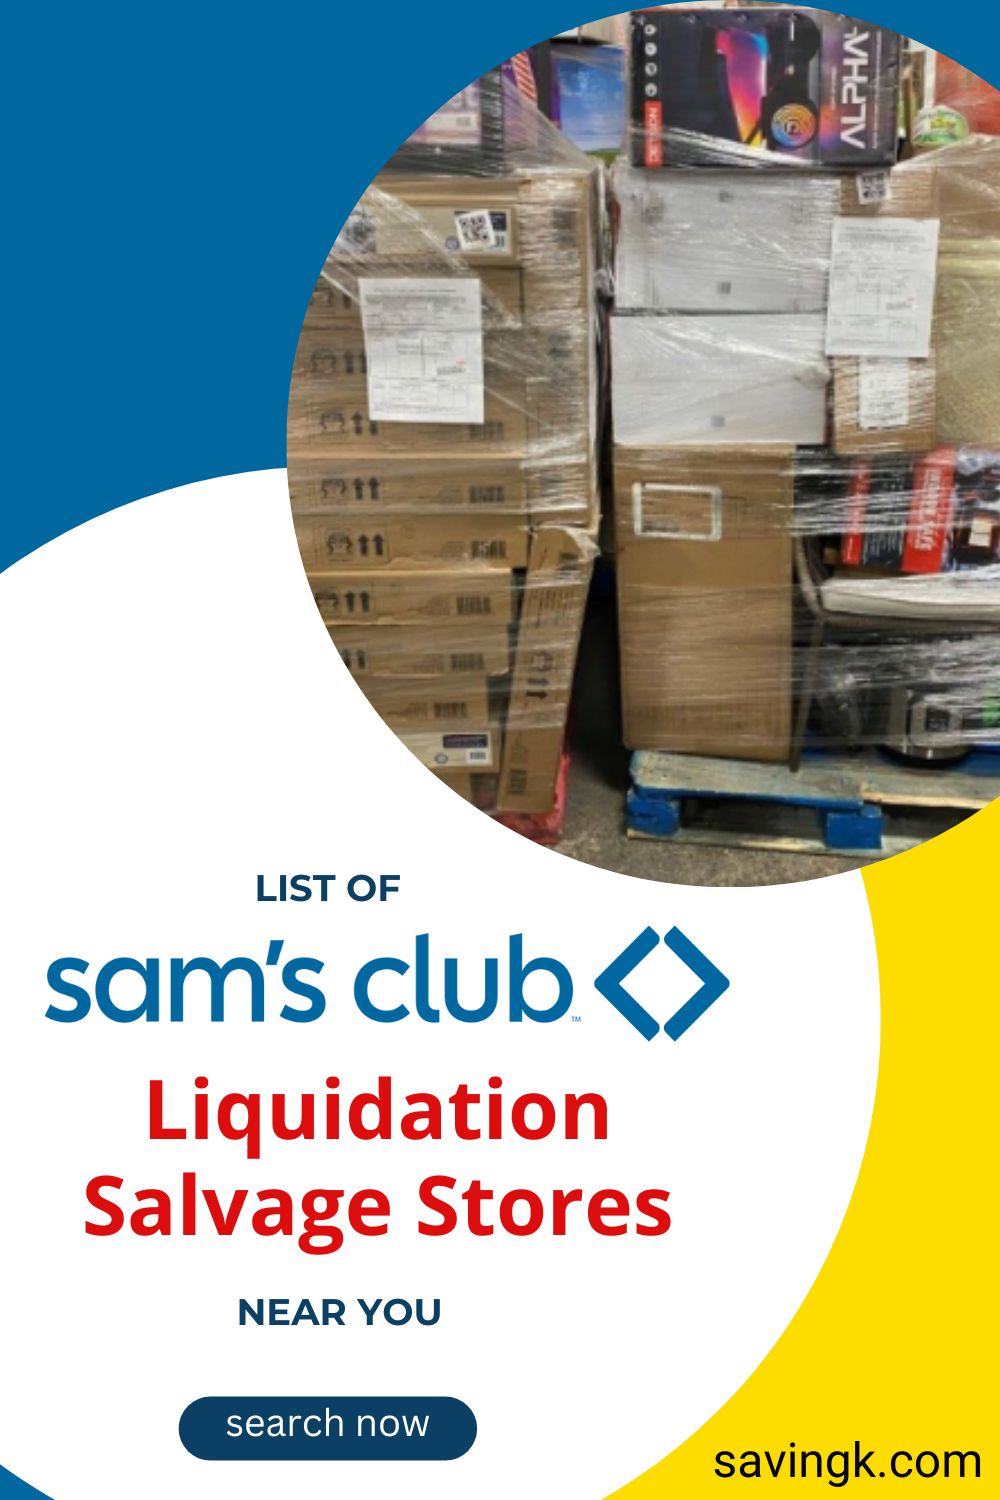 Sam's Club Liquidation Salvage Stores Near Me